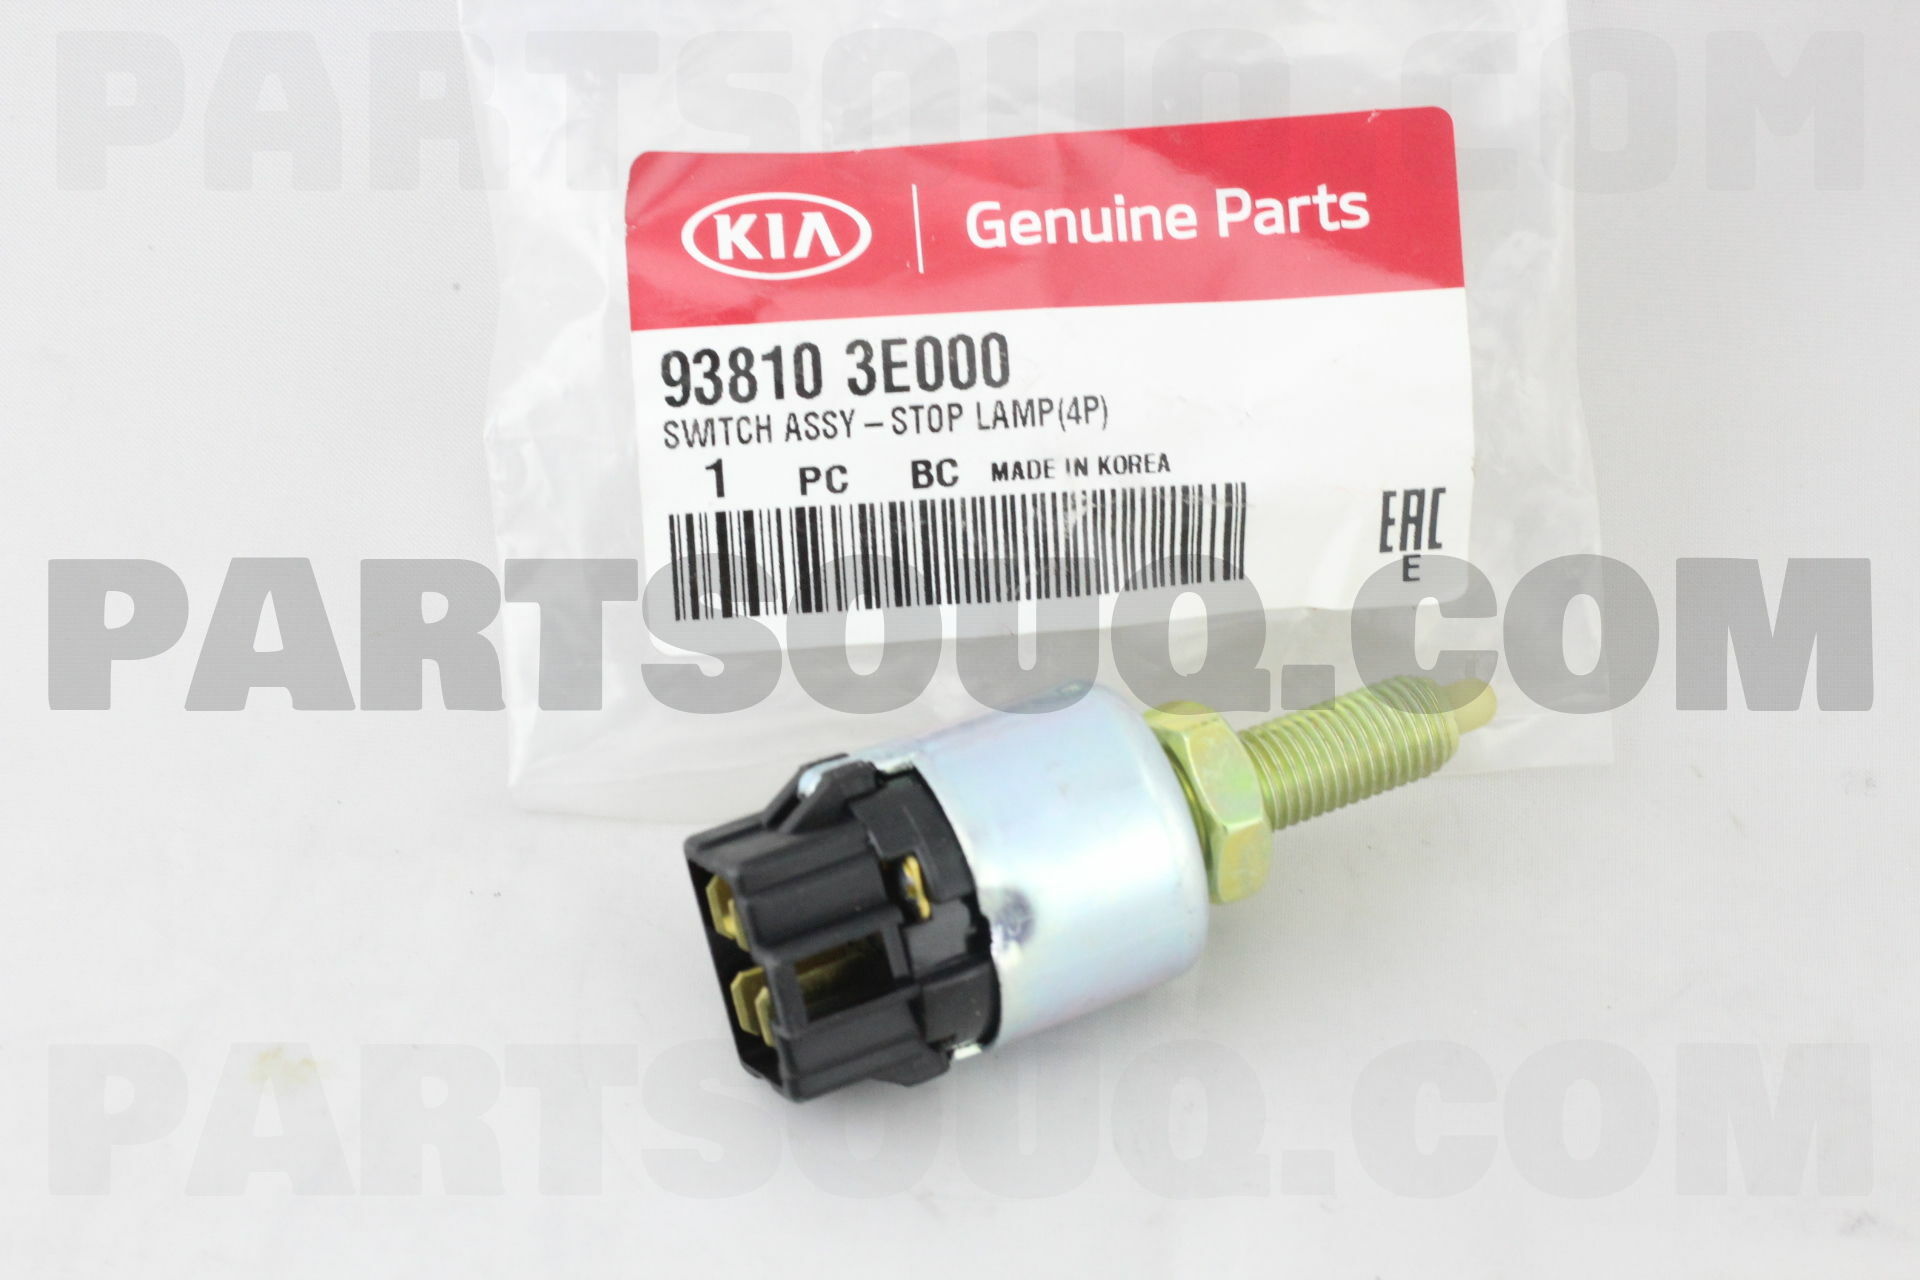 Brake Light Switch fits KIA Lemark 0K20C66490A 938103E000 Top Quality Guaranteed 